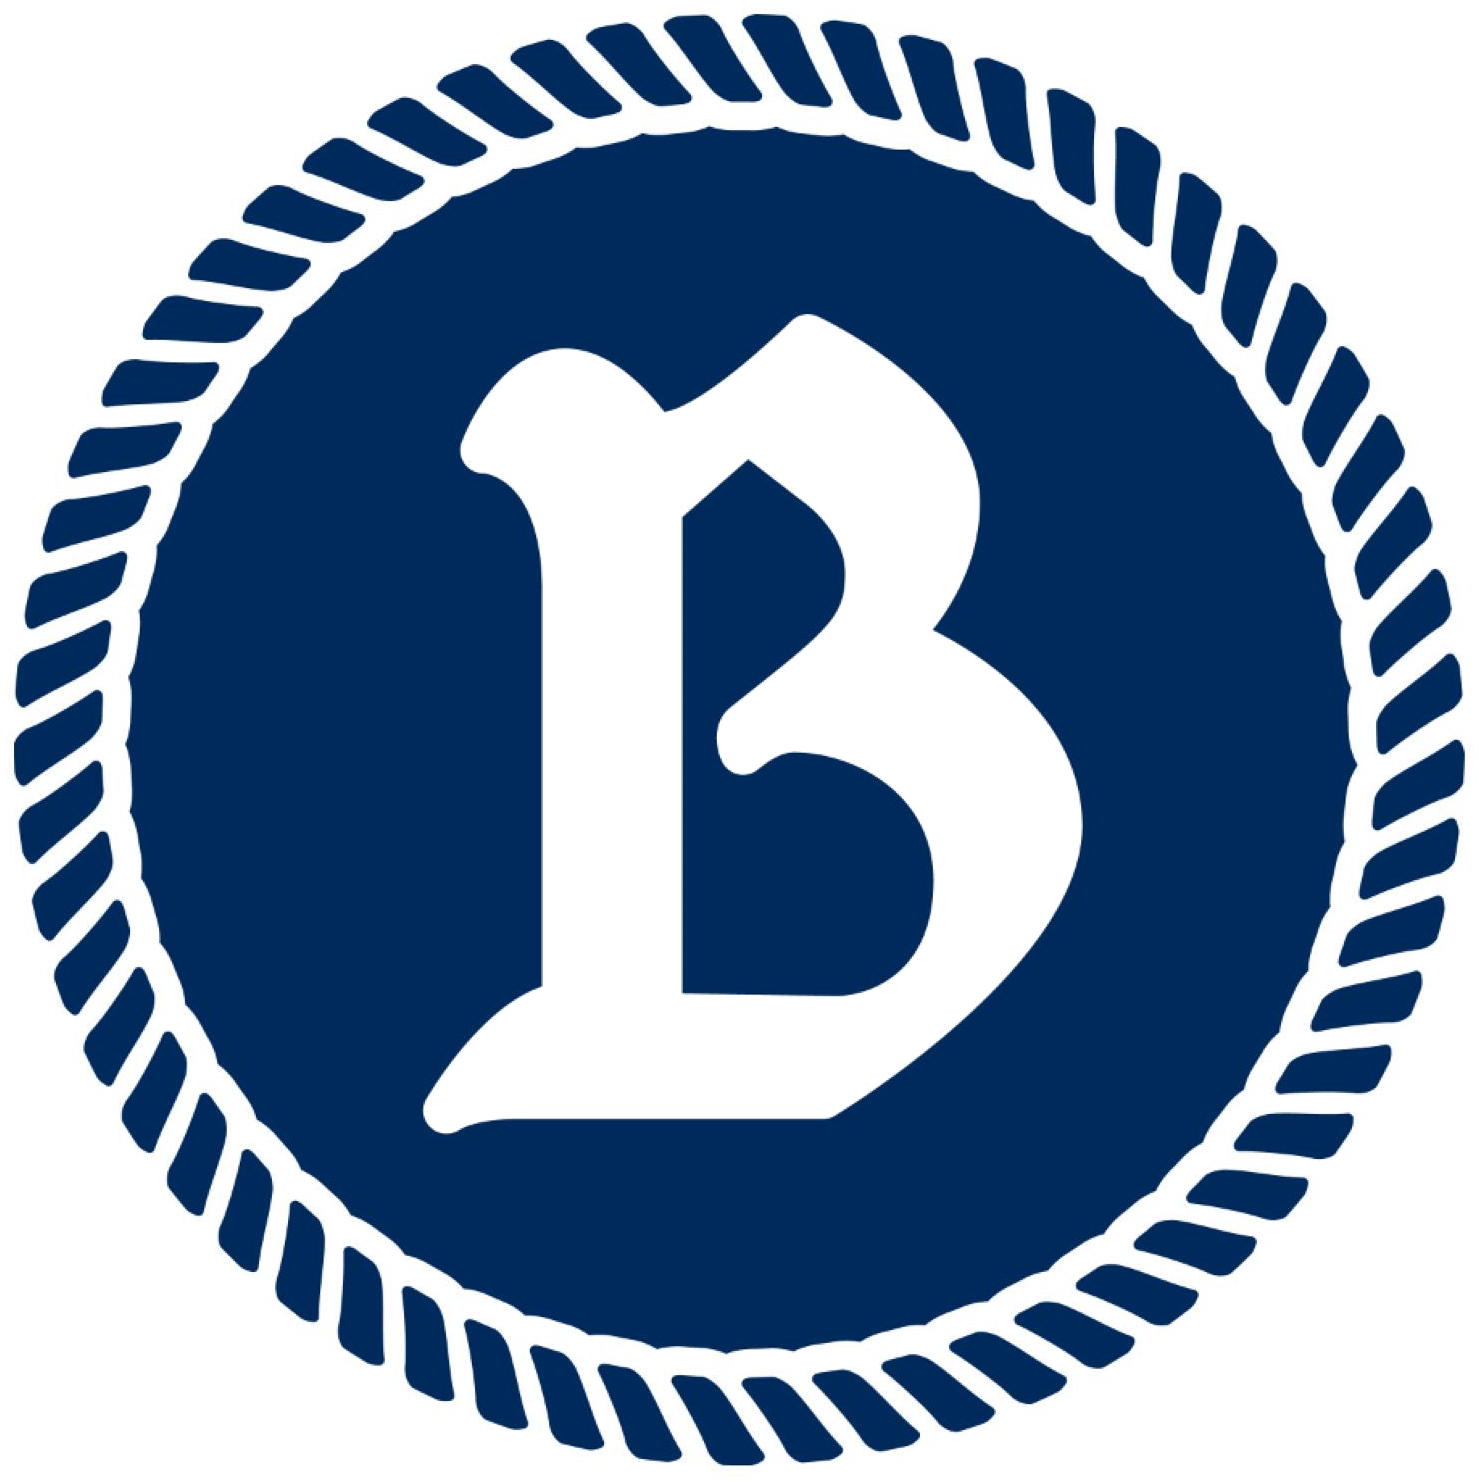 Brigantine Logo - Brigantine Oyster Company – Steelmans Bay & Sunflower Island Oysters ...